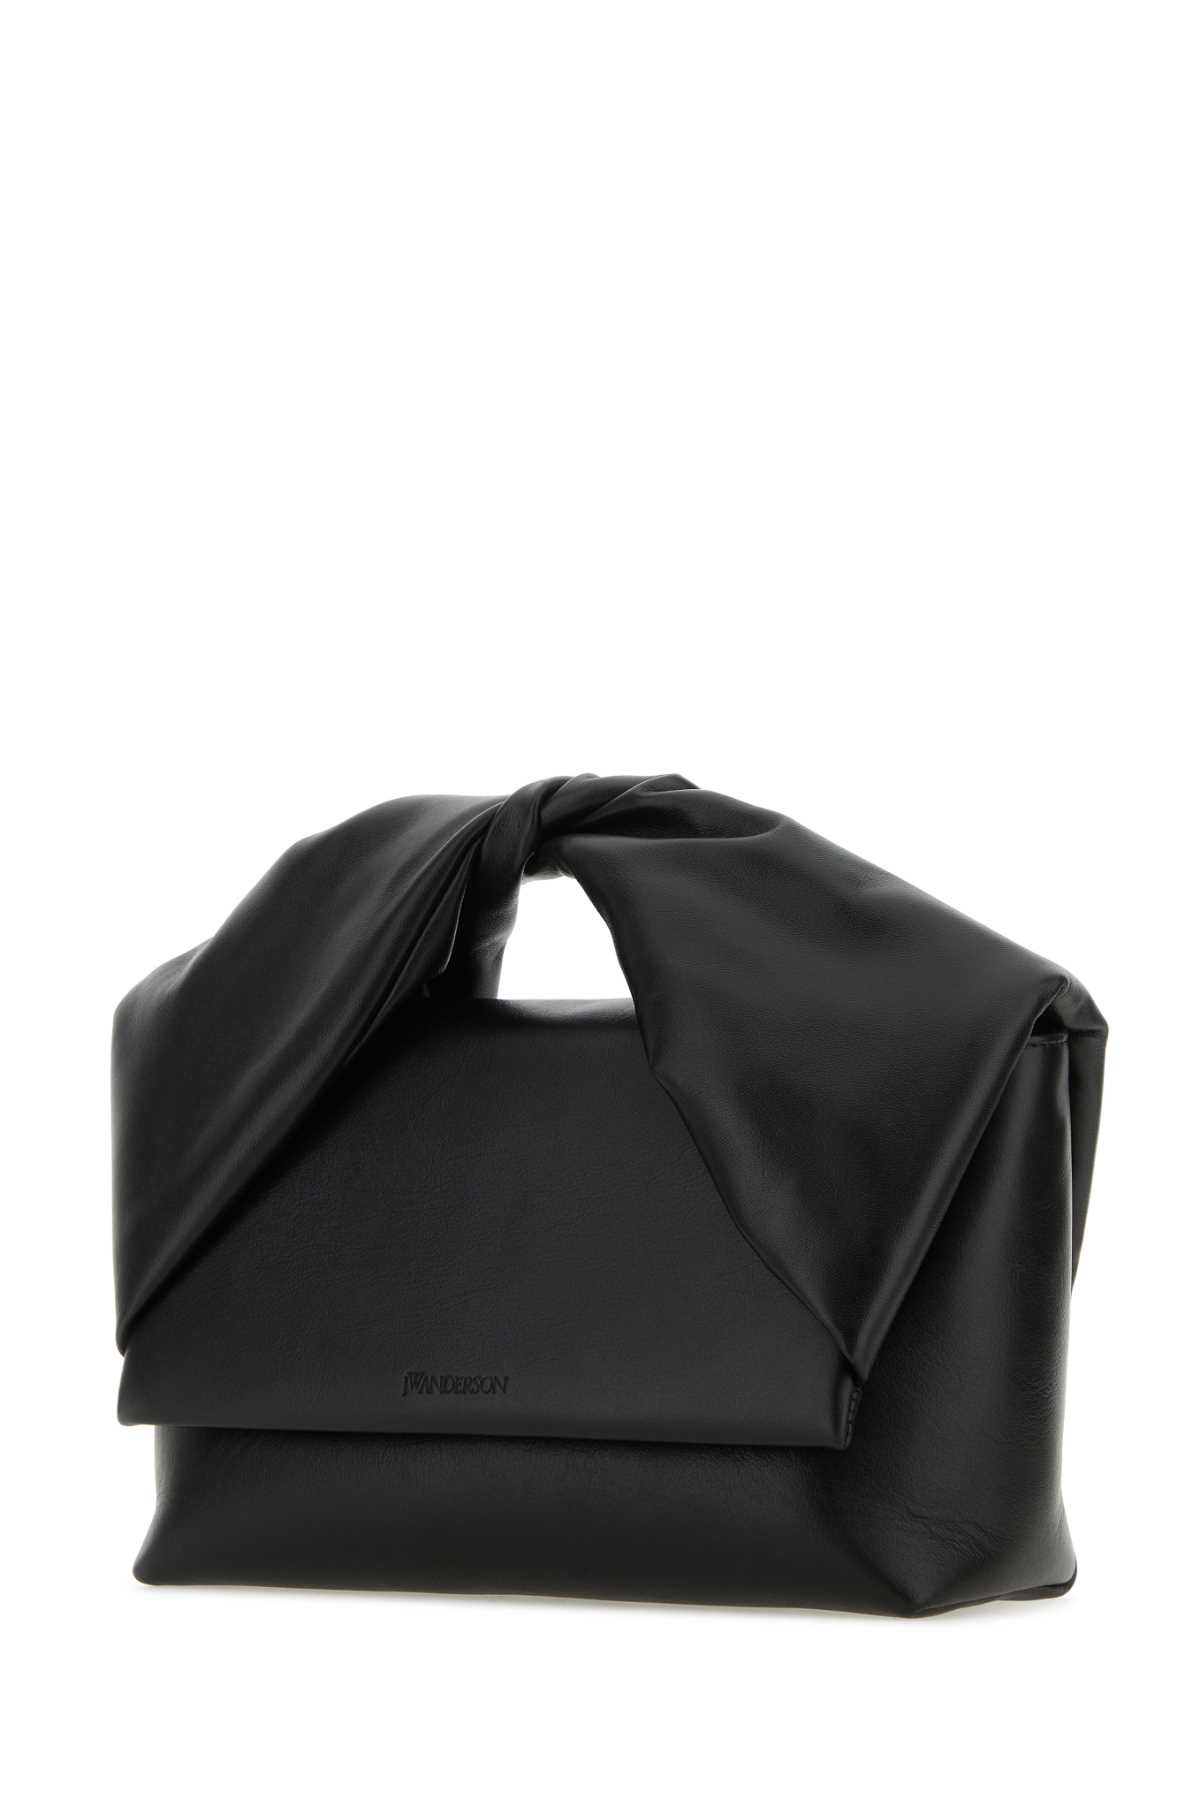 Jw Anderson Black Nappa Leather Twister Handbag